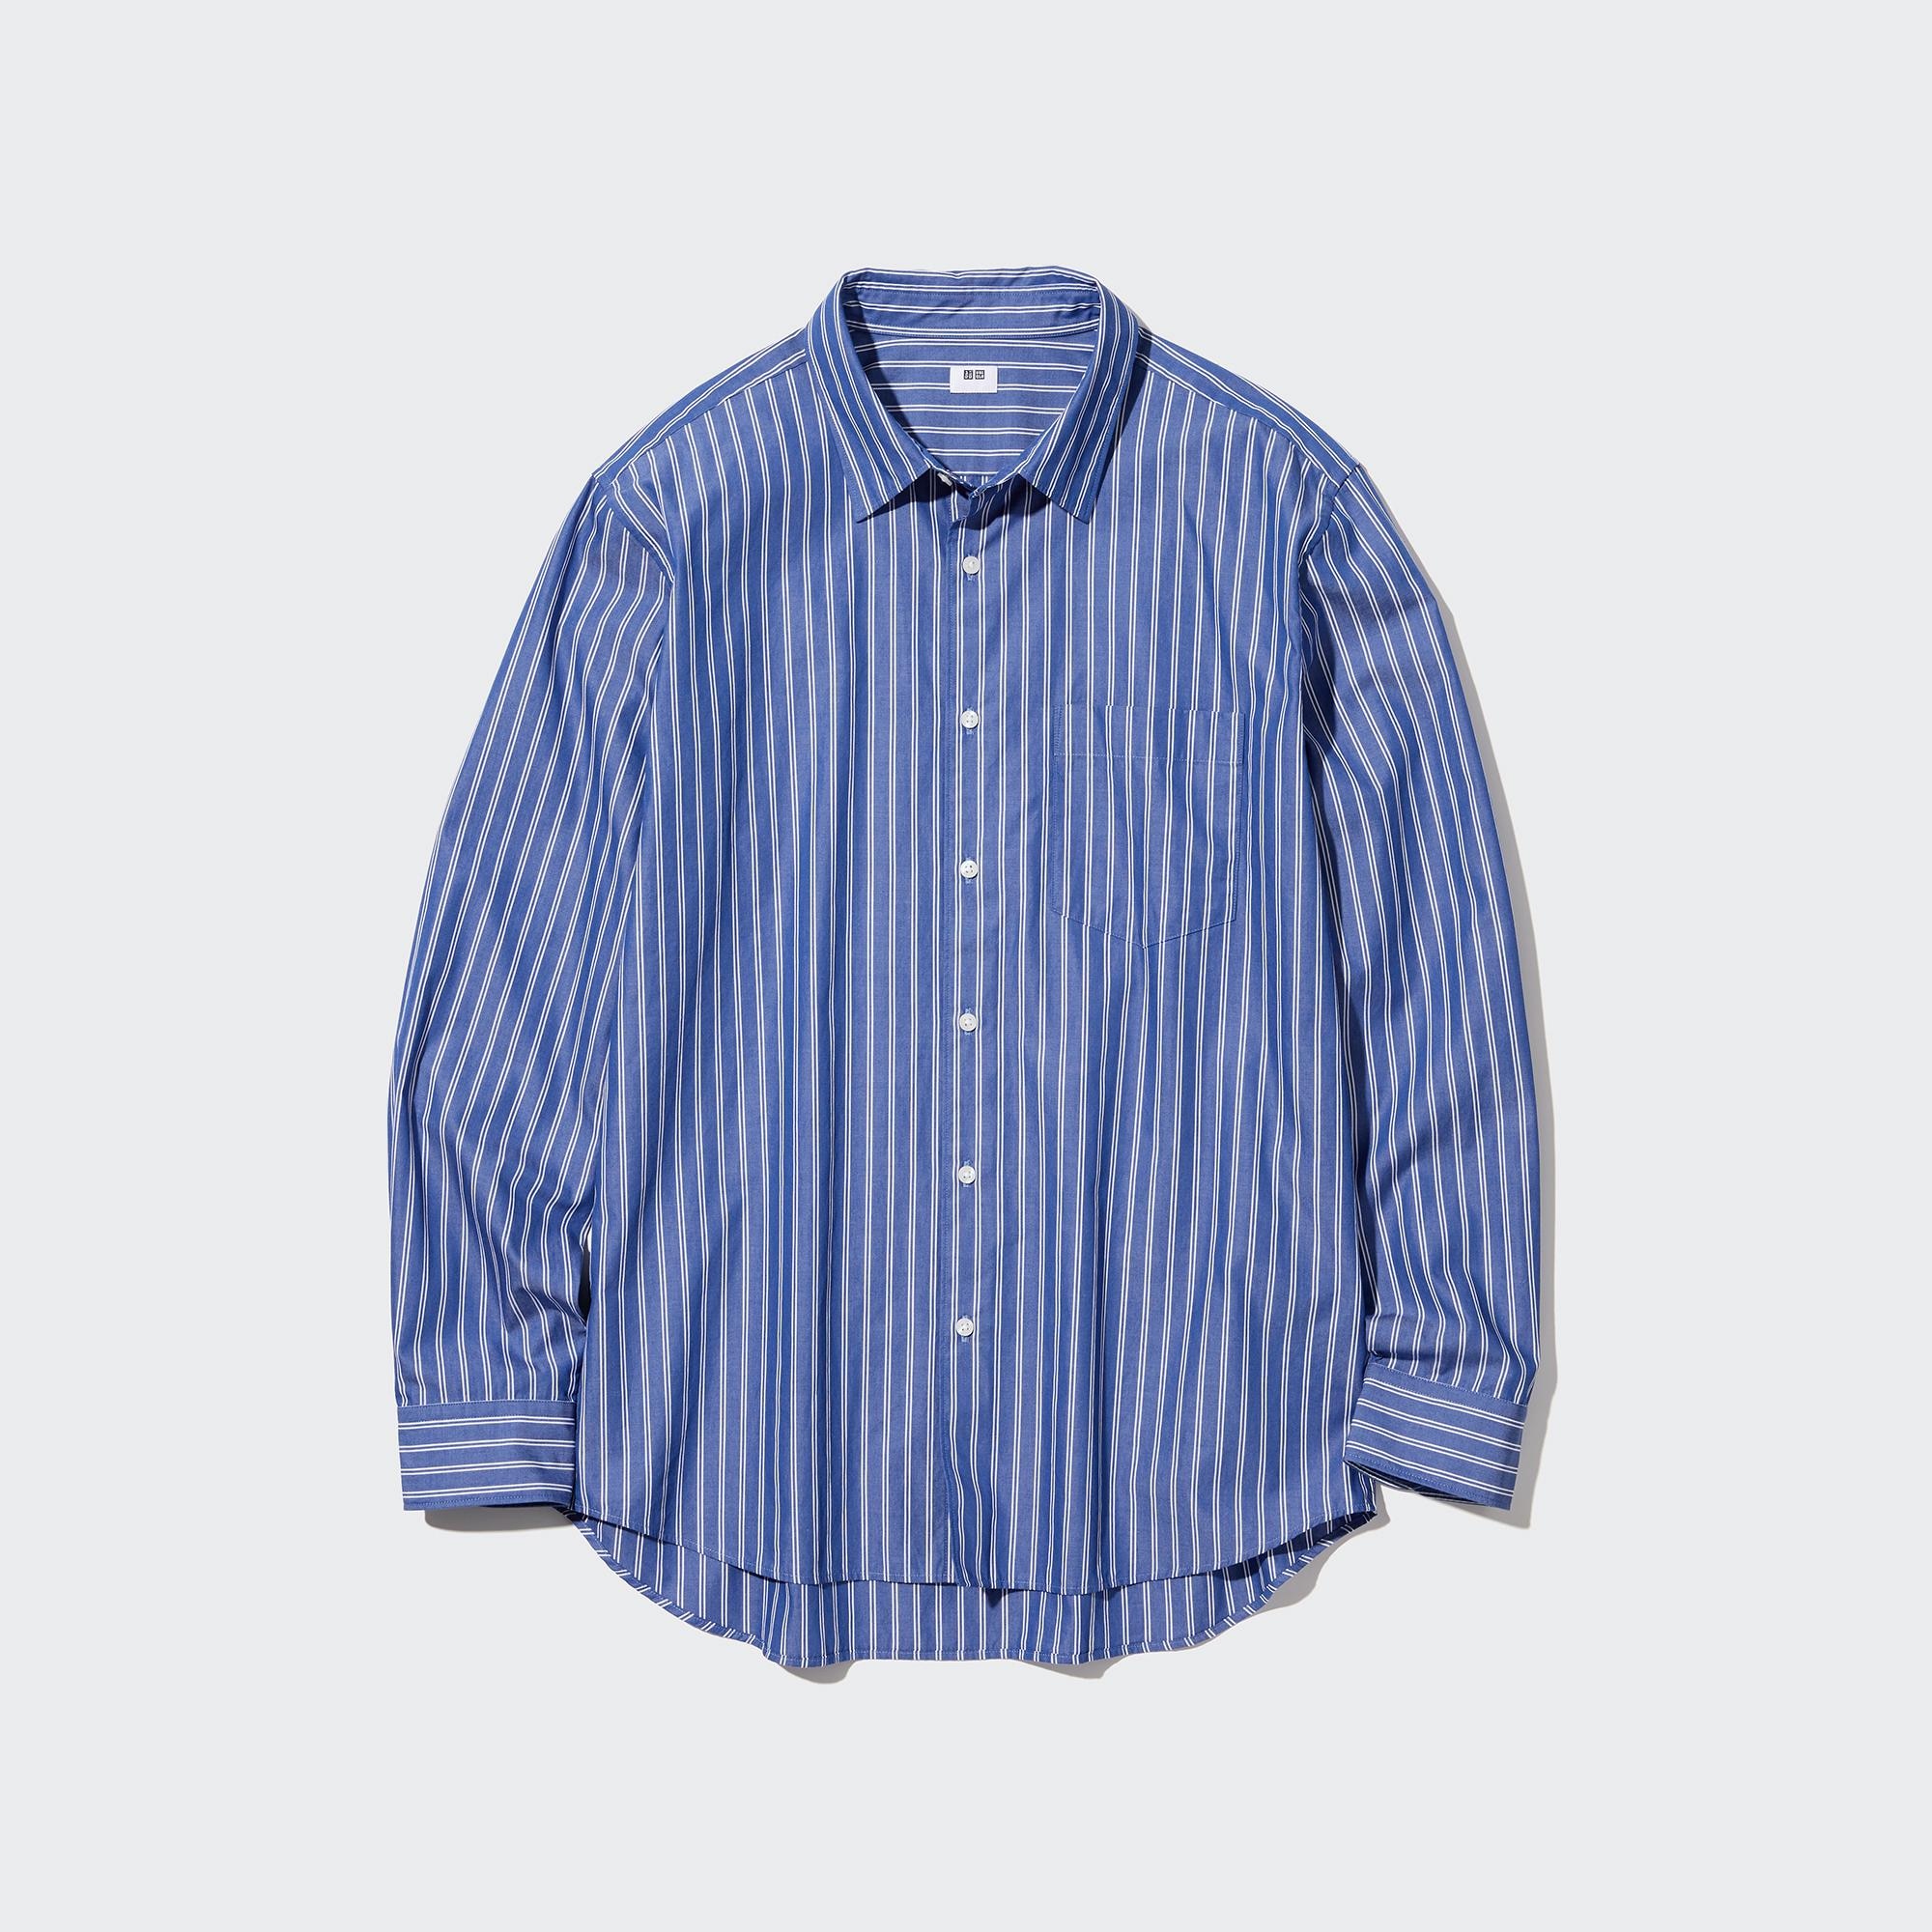 XL【新品未使用】ユニクロU ツイルオーバーサイズチェックシャツ BLUE